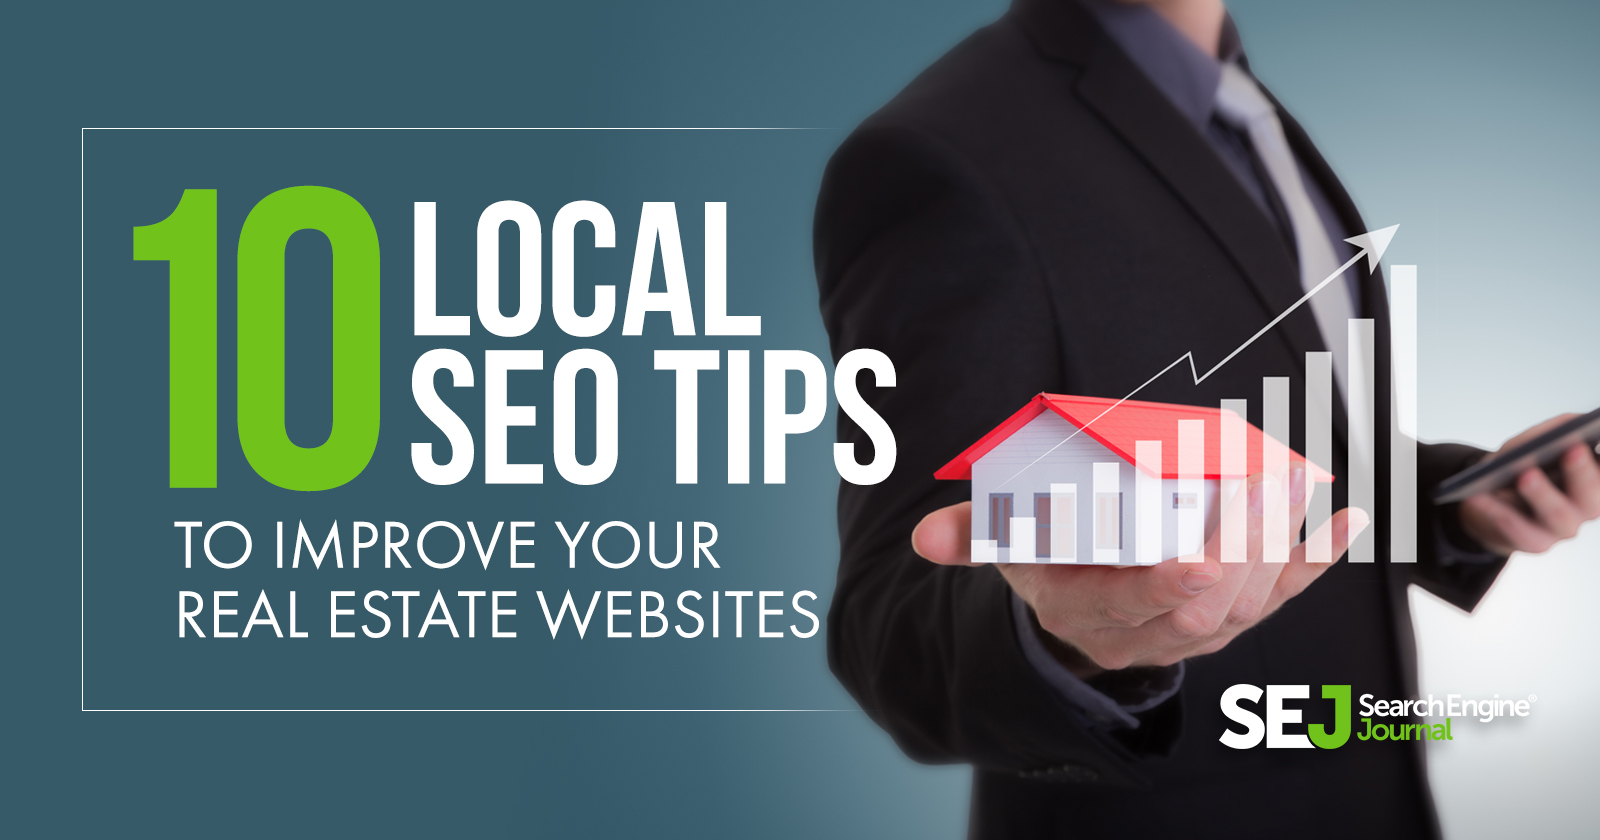 SEJ-Local-SEO-Tips-for-Real-Estate-Websites.jpg